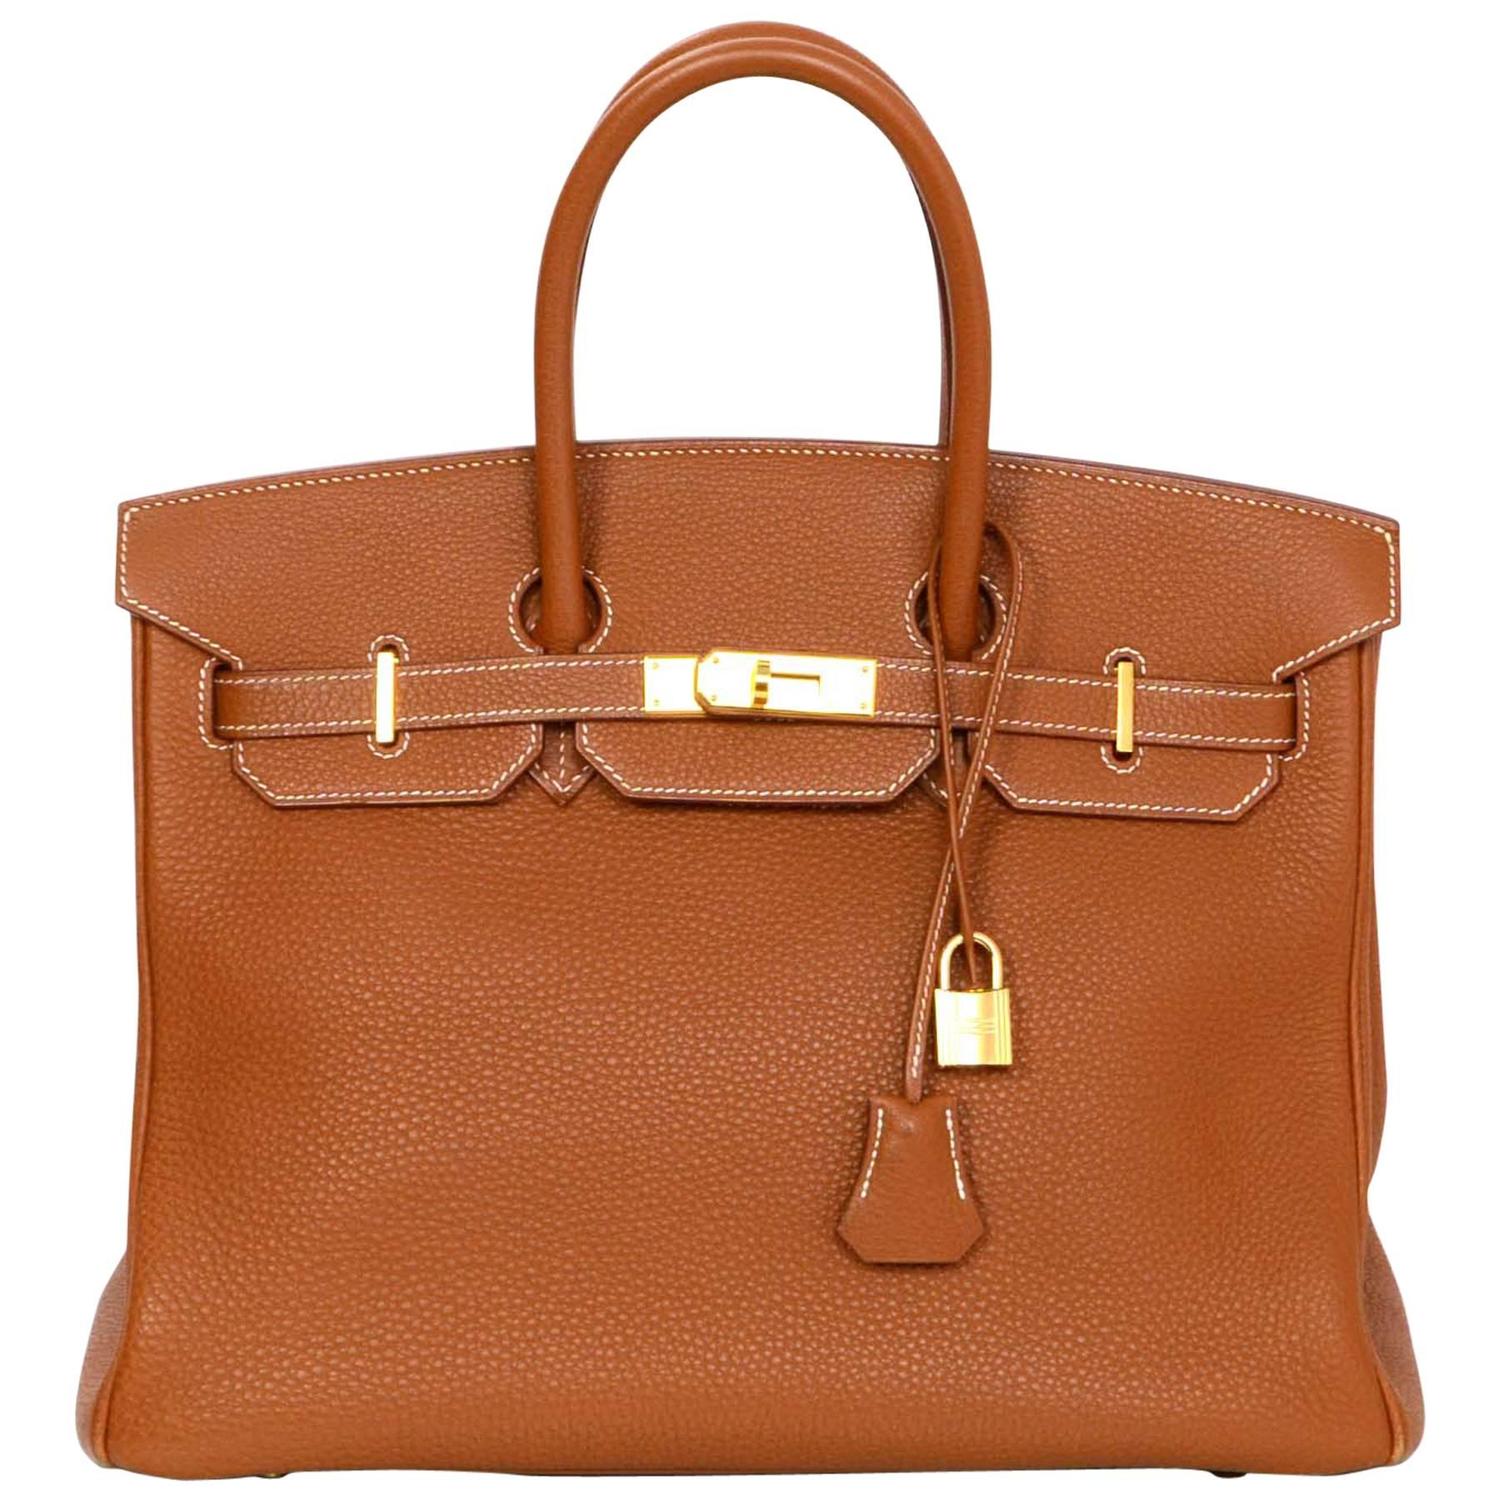 Hermes Gold/Tan Togo Leather 35cm Birkin Bag w/ Box and Dust Bag at 1stdibs